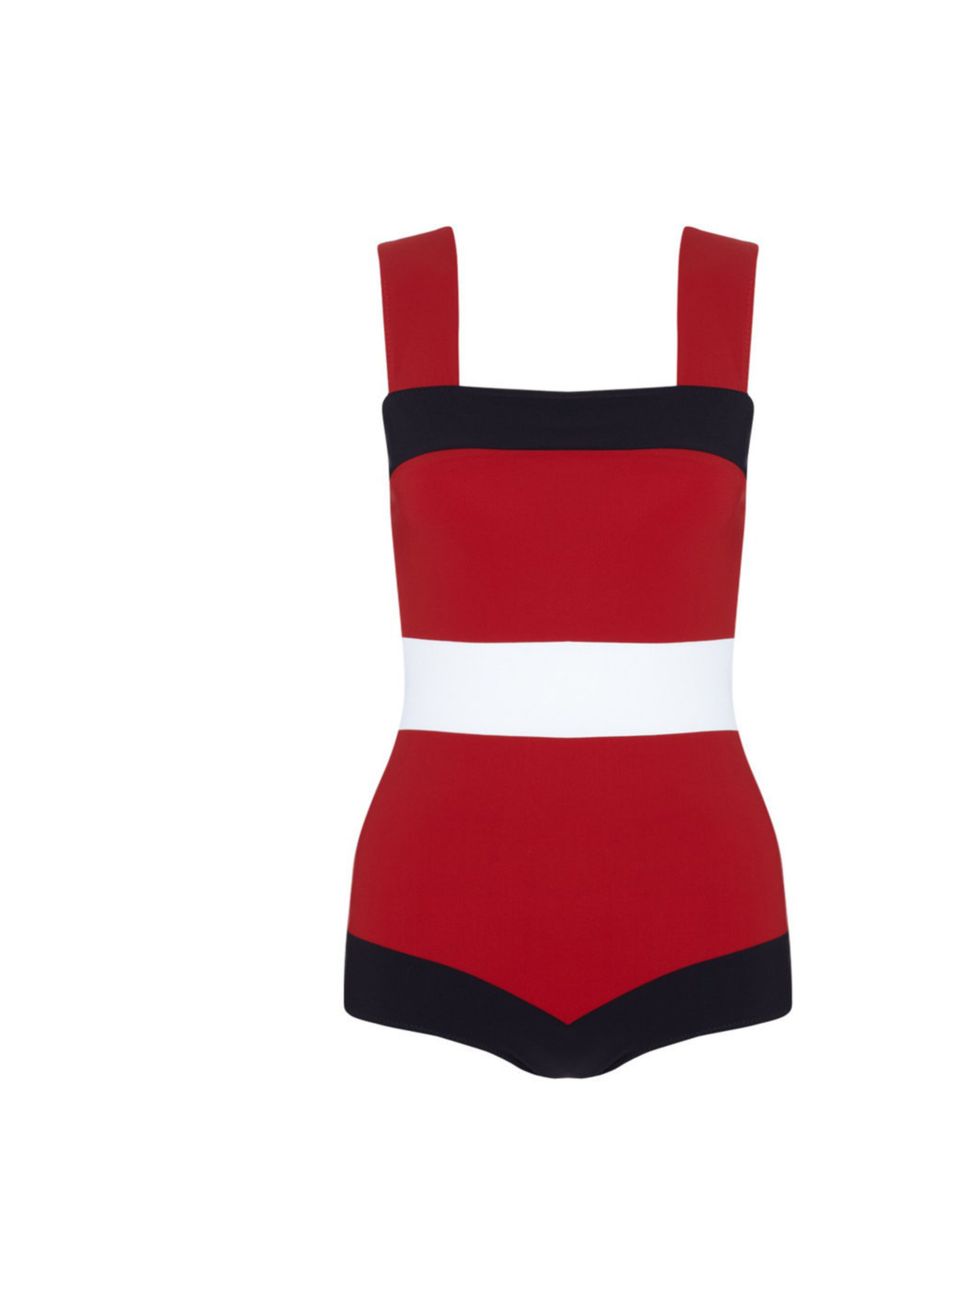 <p>Roksanda Ilincic swimsuit, £315, at <a href="http://www.avenue32.com/whats-new/red_talgo_swimsuit_30901.html">Avenue 32</a></p>